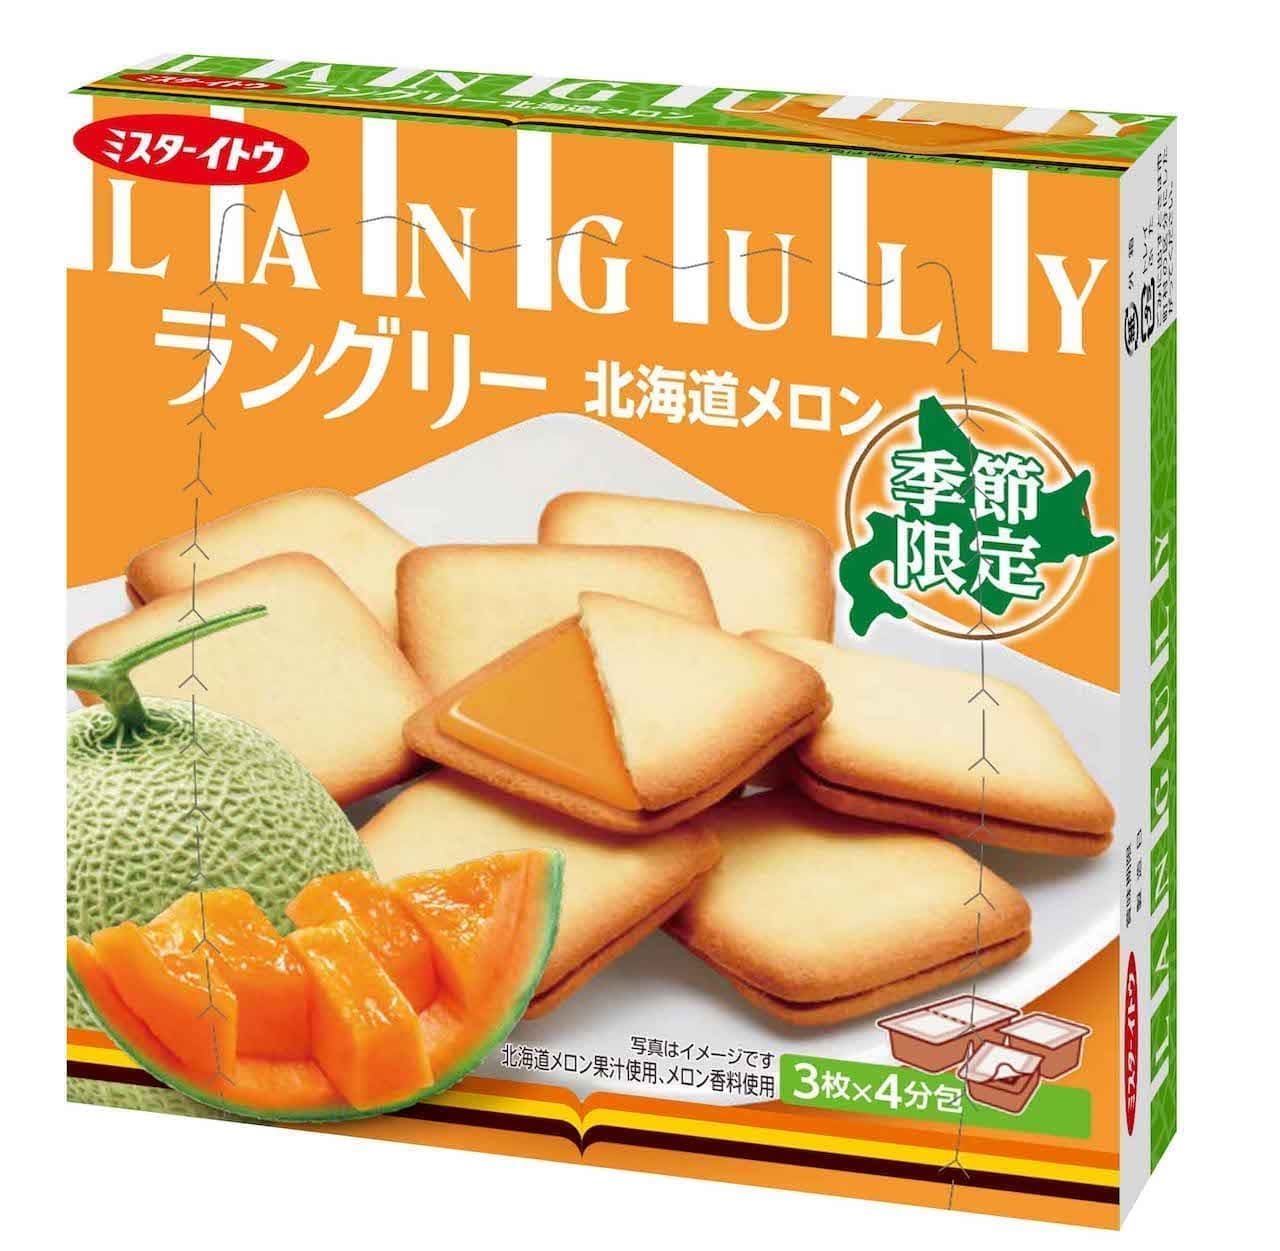 From "Langry Hokkaido Melon" Ito Confectionery